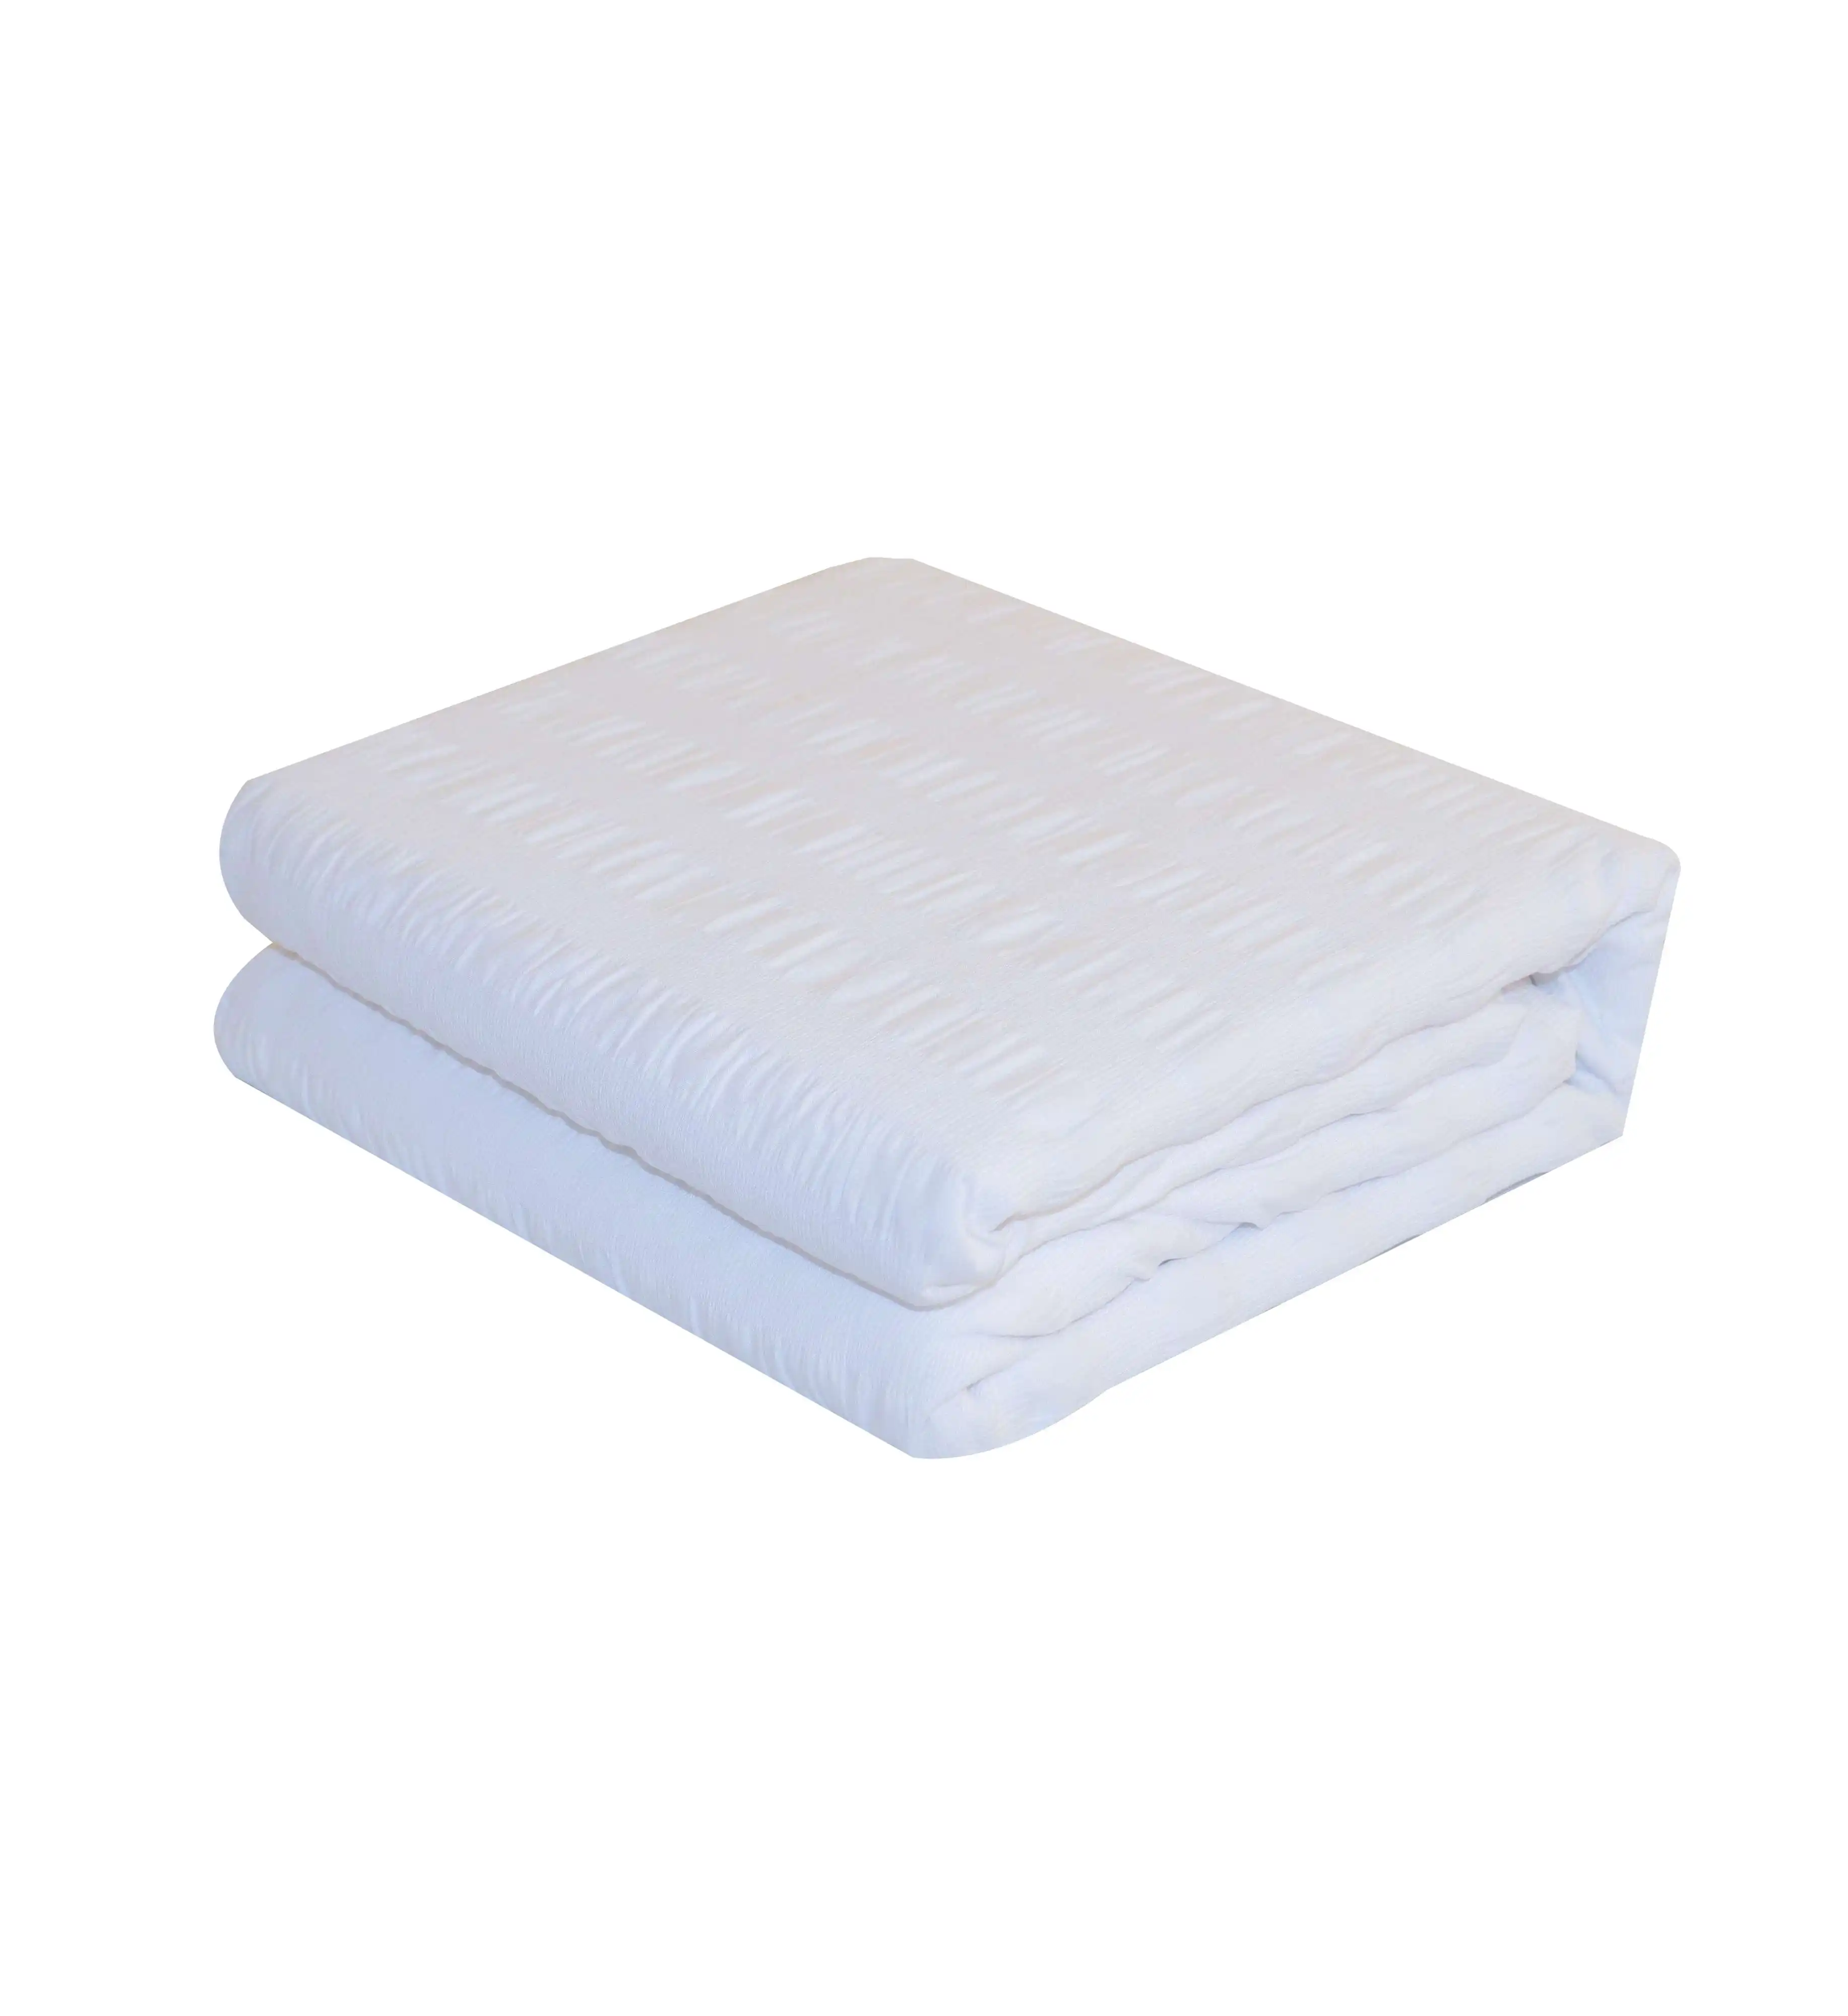 China Top Selling Home Textile Microfiber Printed Comforter Duvet Cover Set